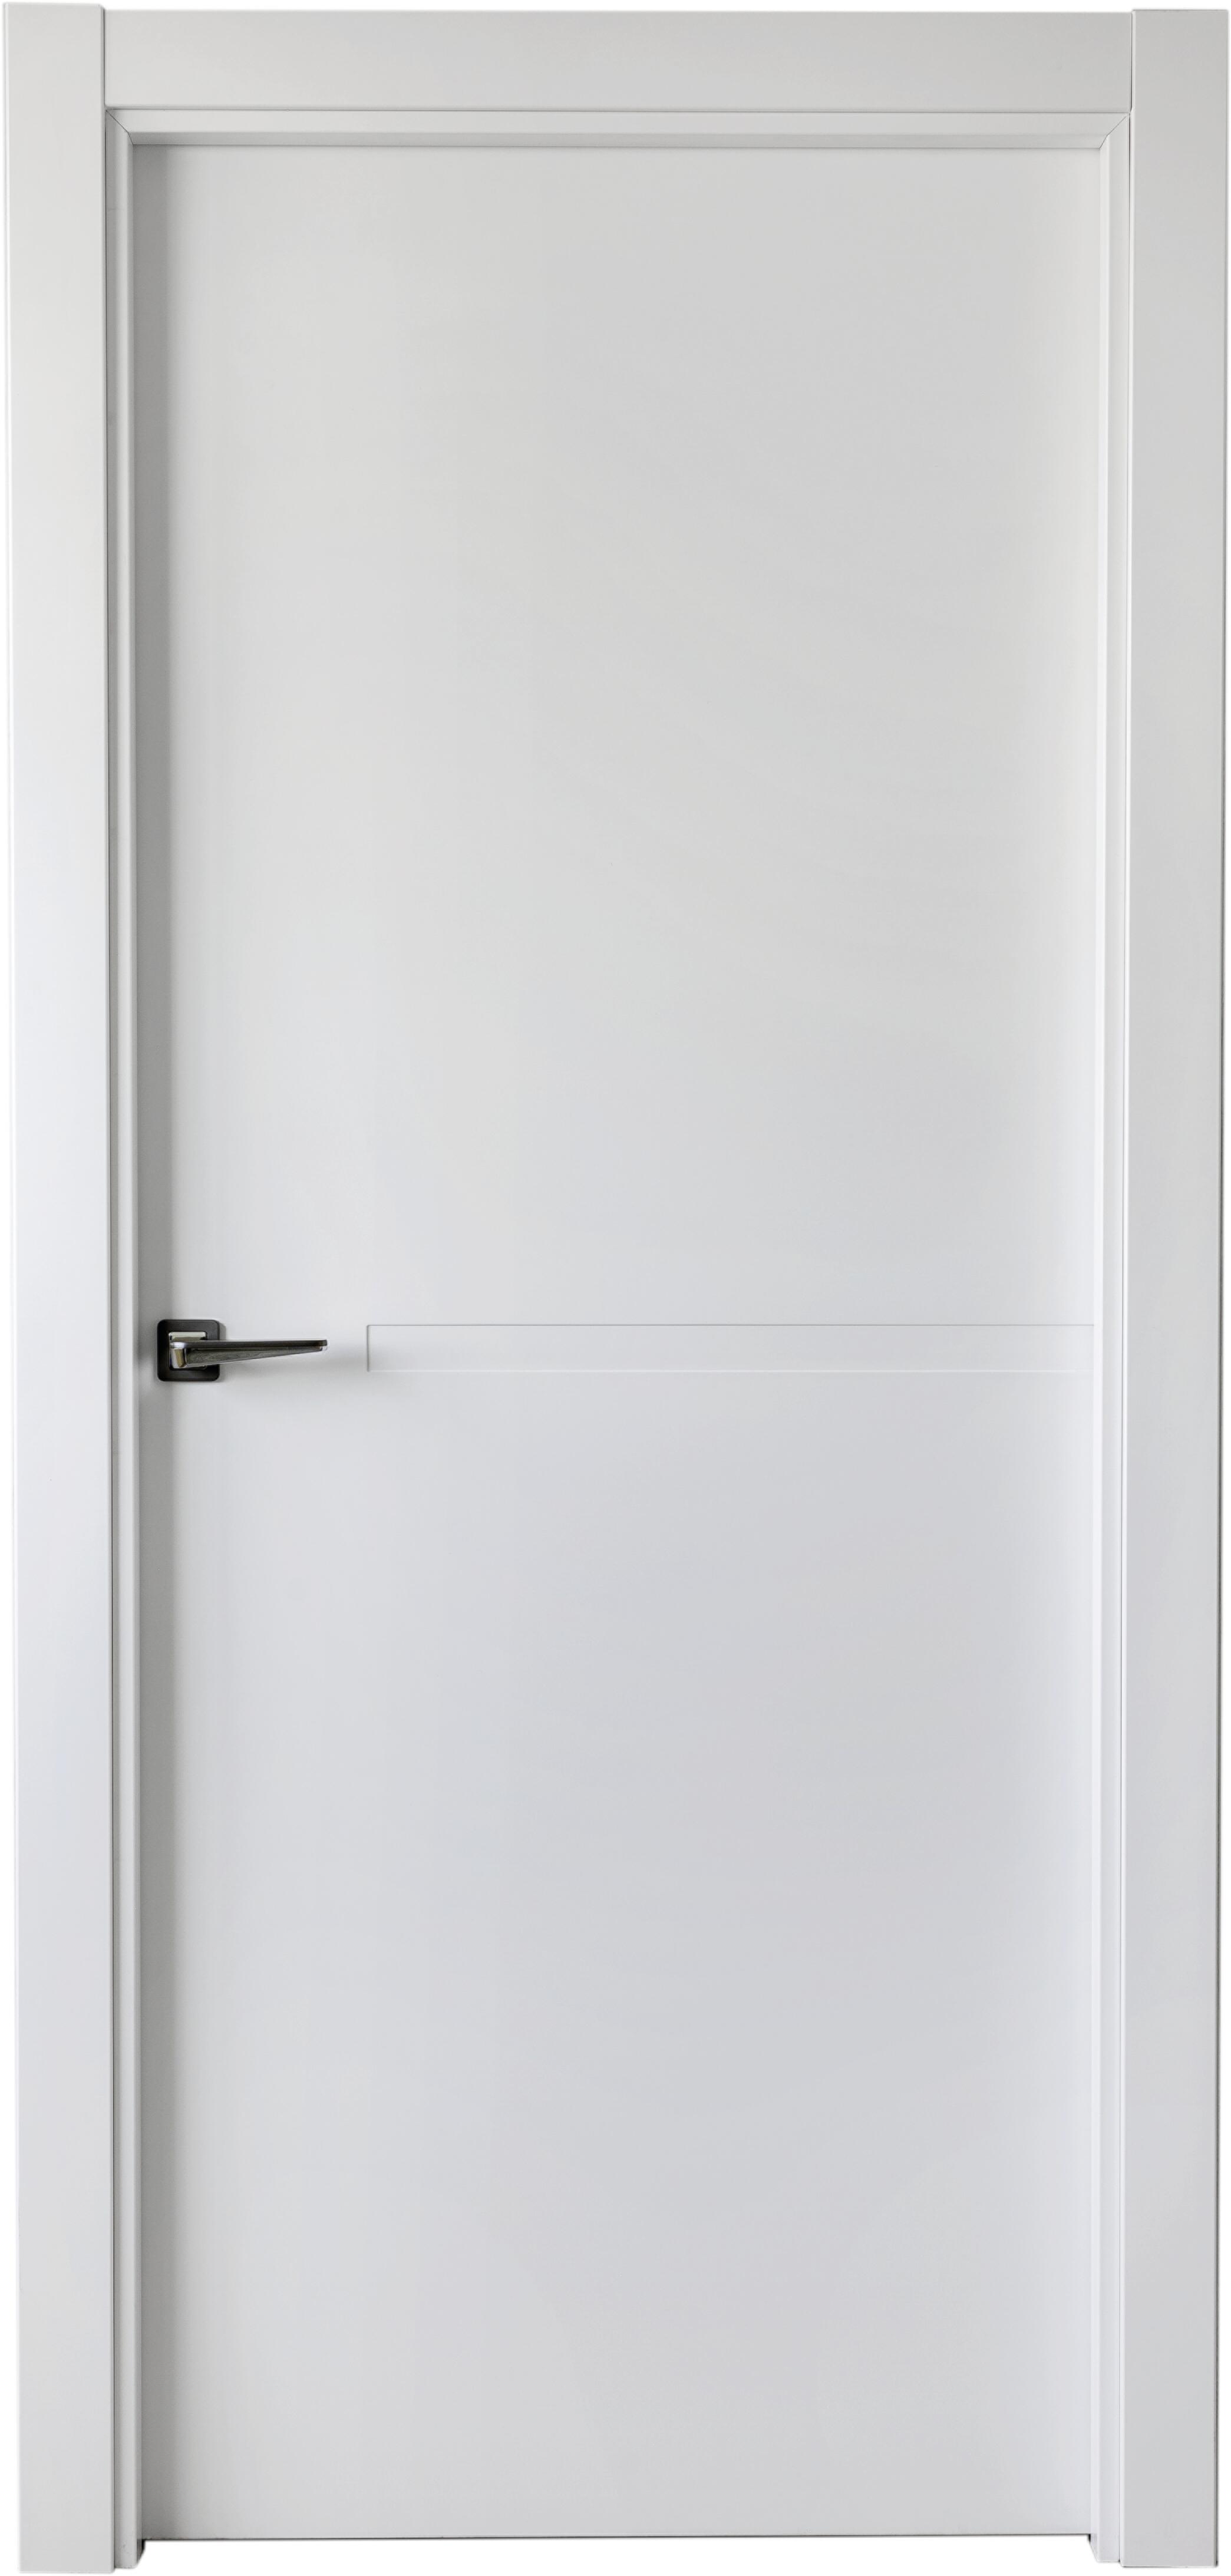 Puerta denver blanco apertura derecha de 11x62,5cm